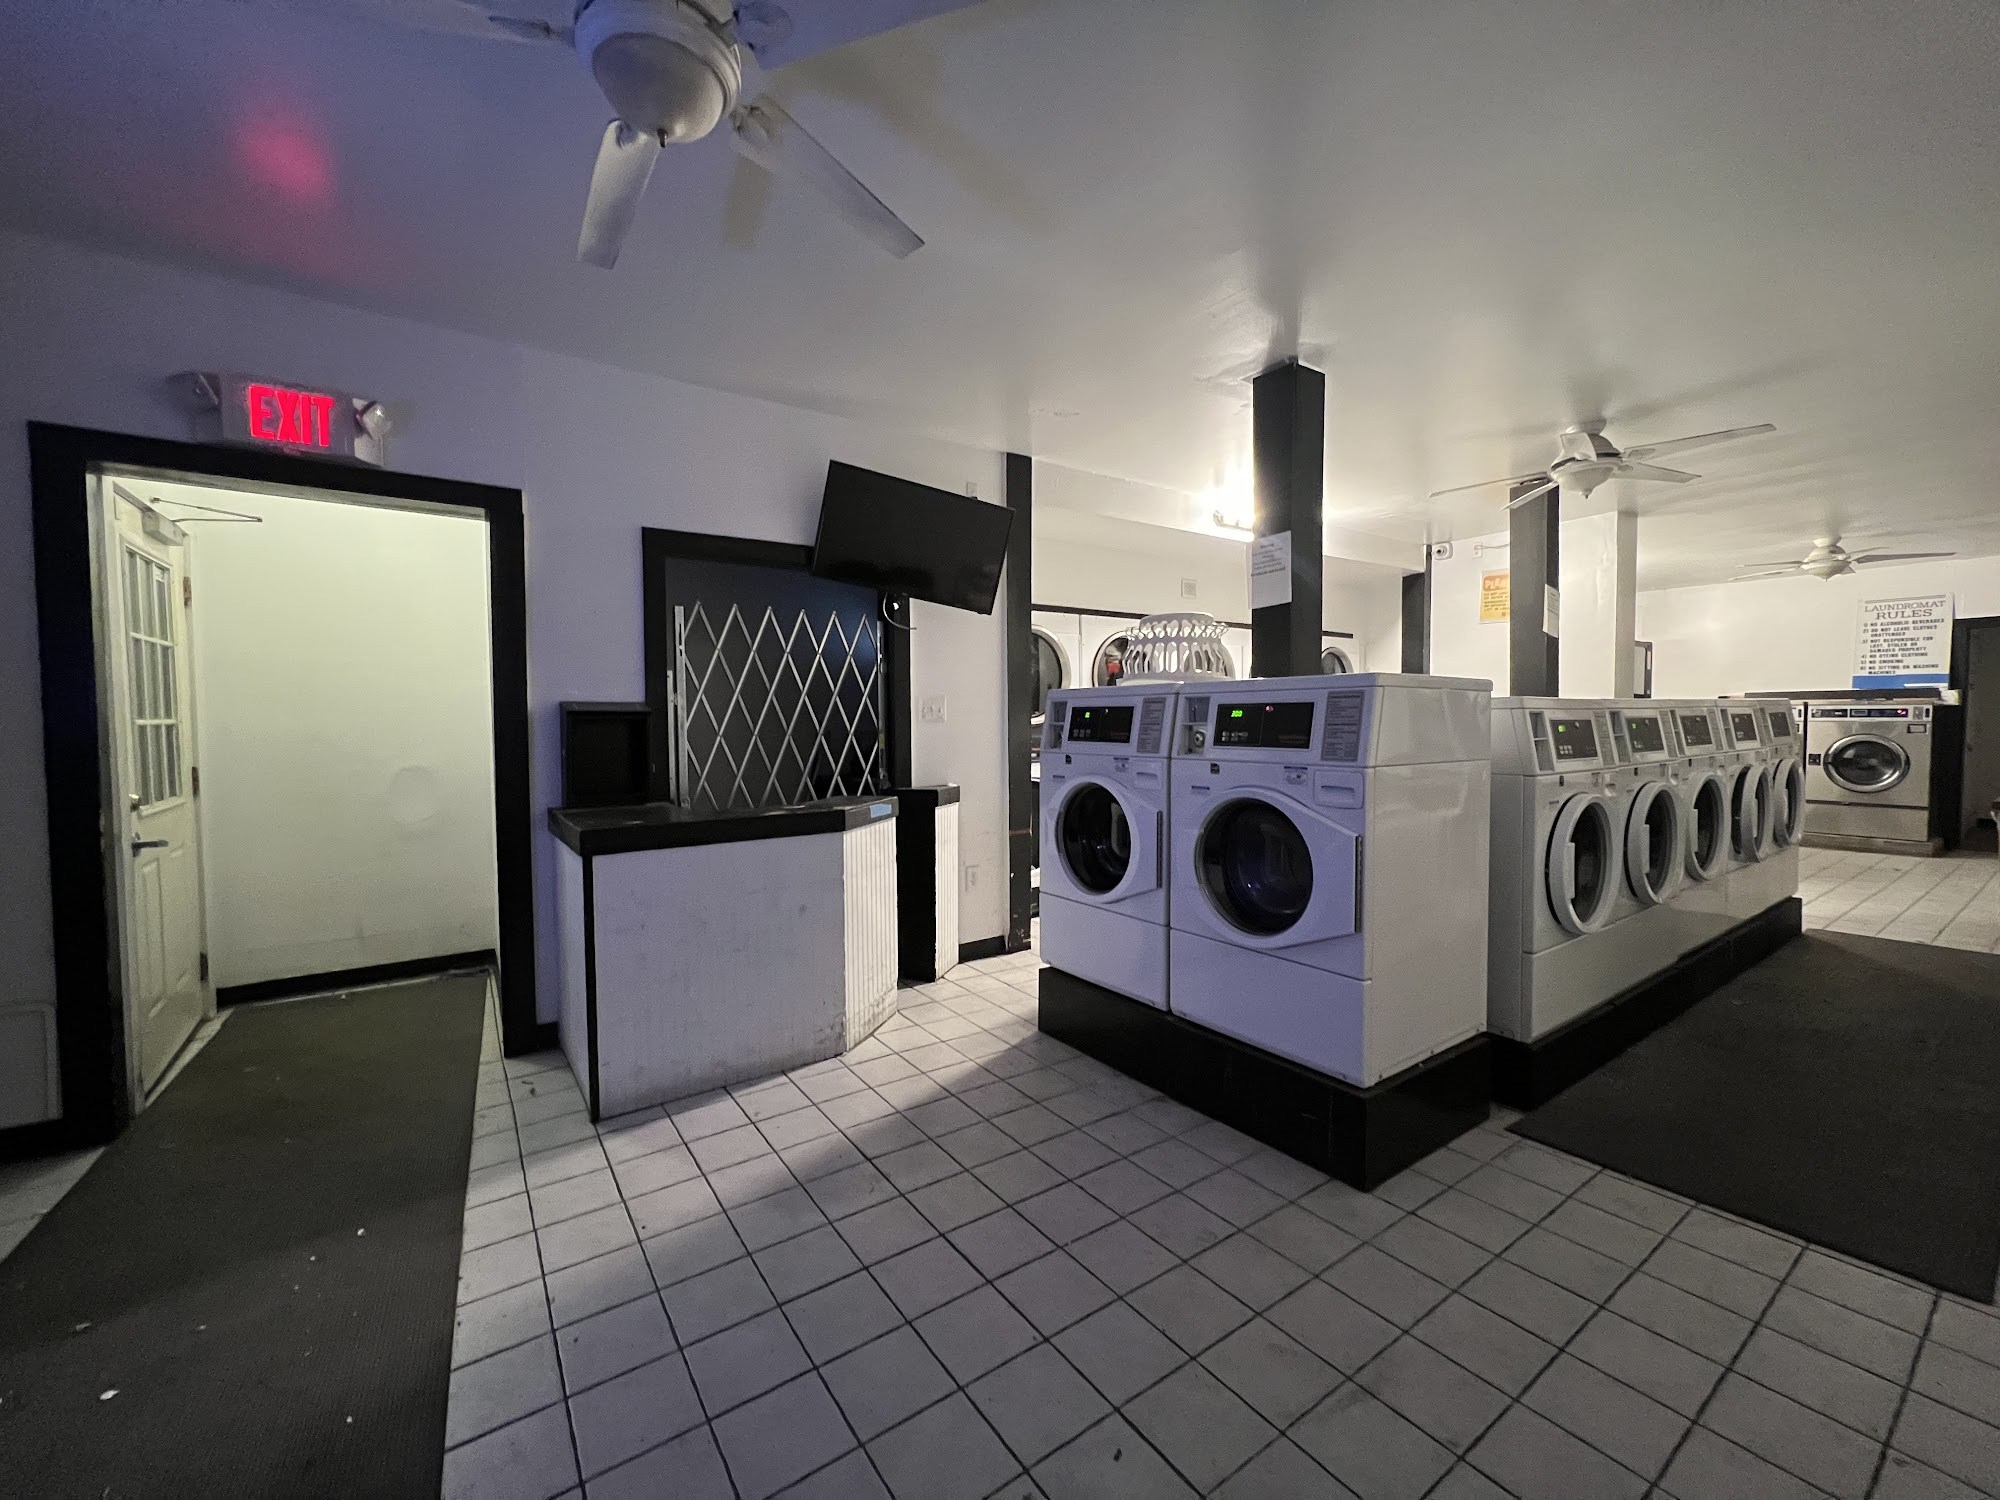 Empire laundromat